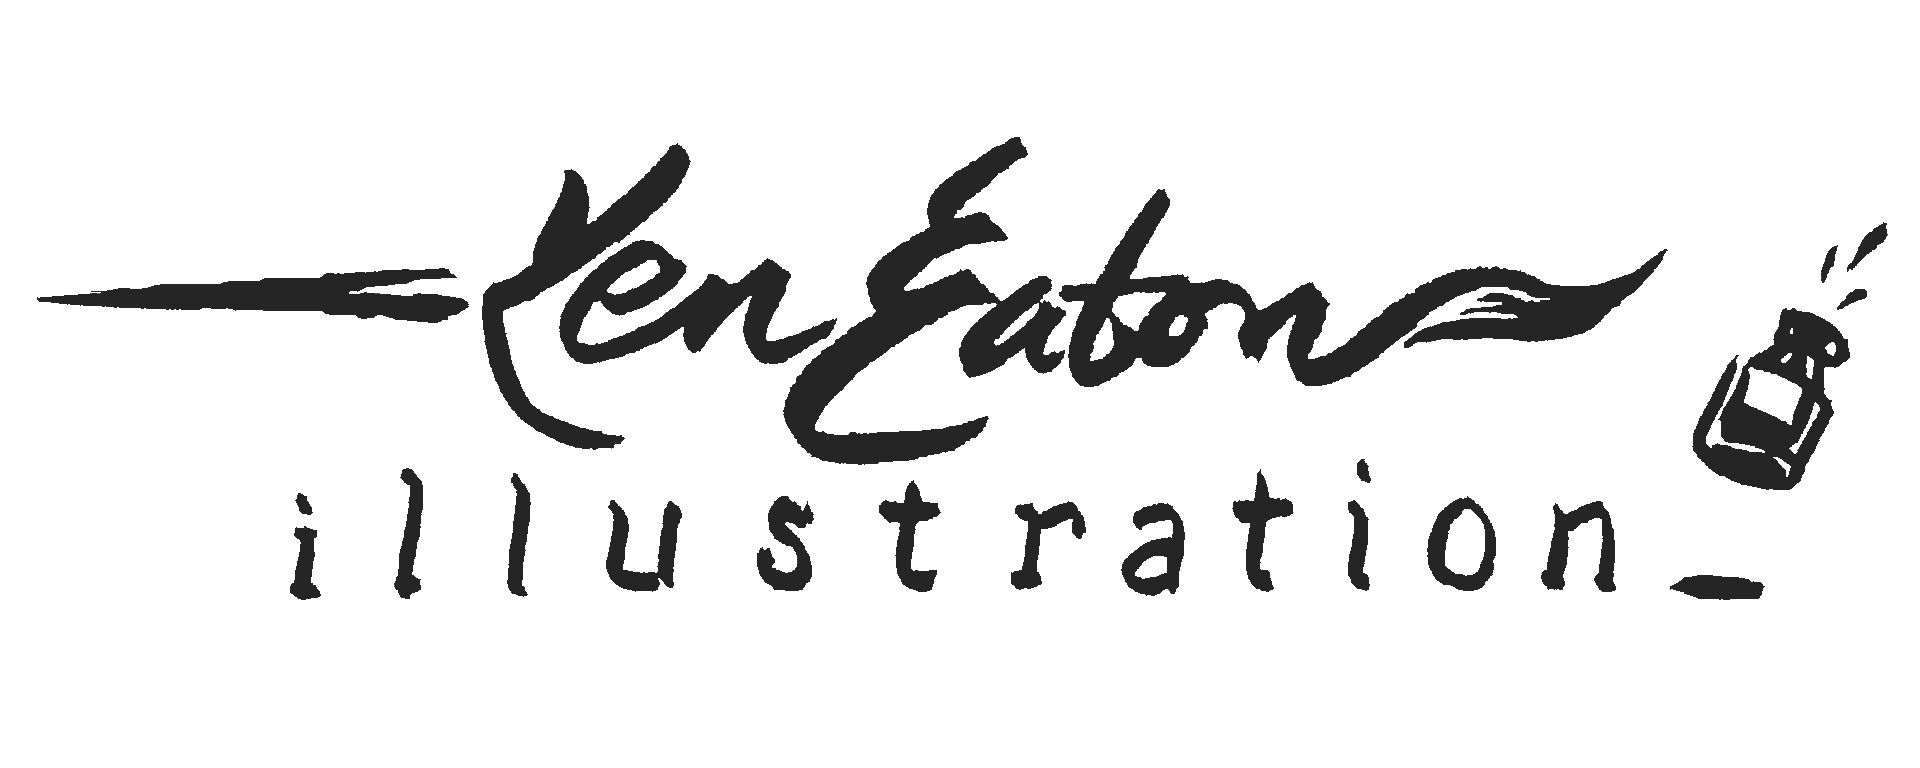 Ken_Eaton_Illustration_logo